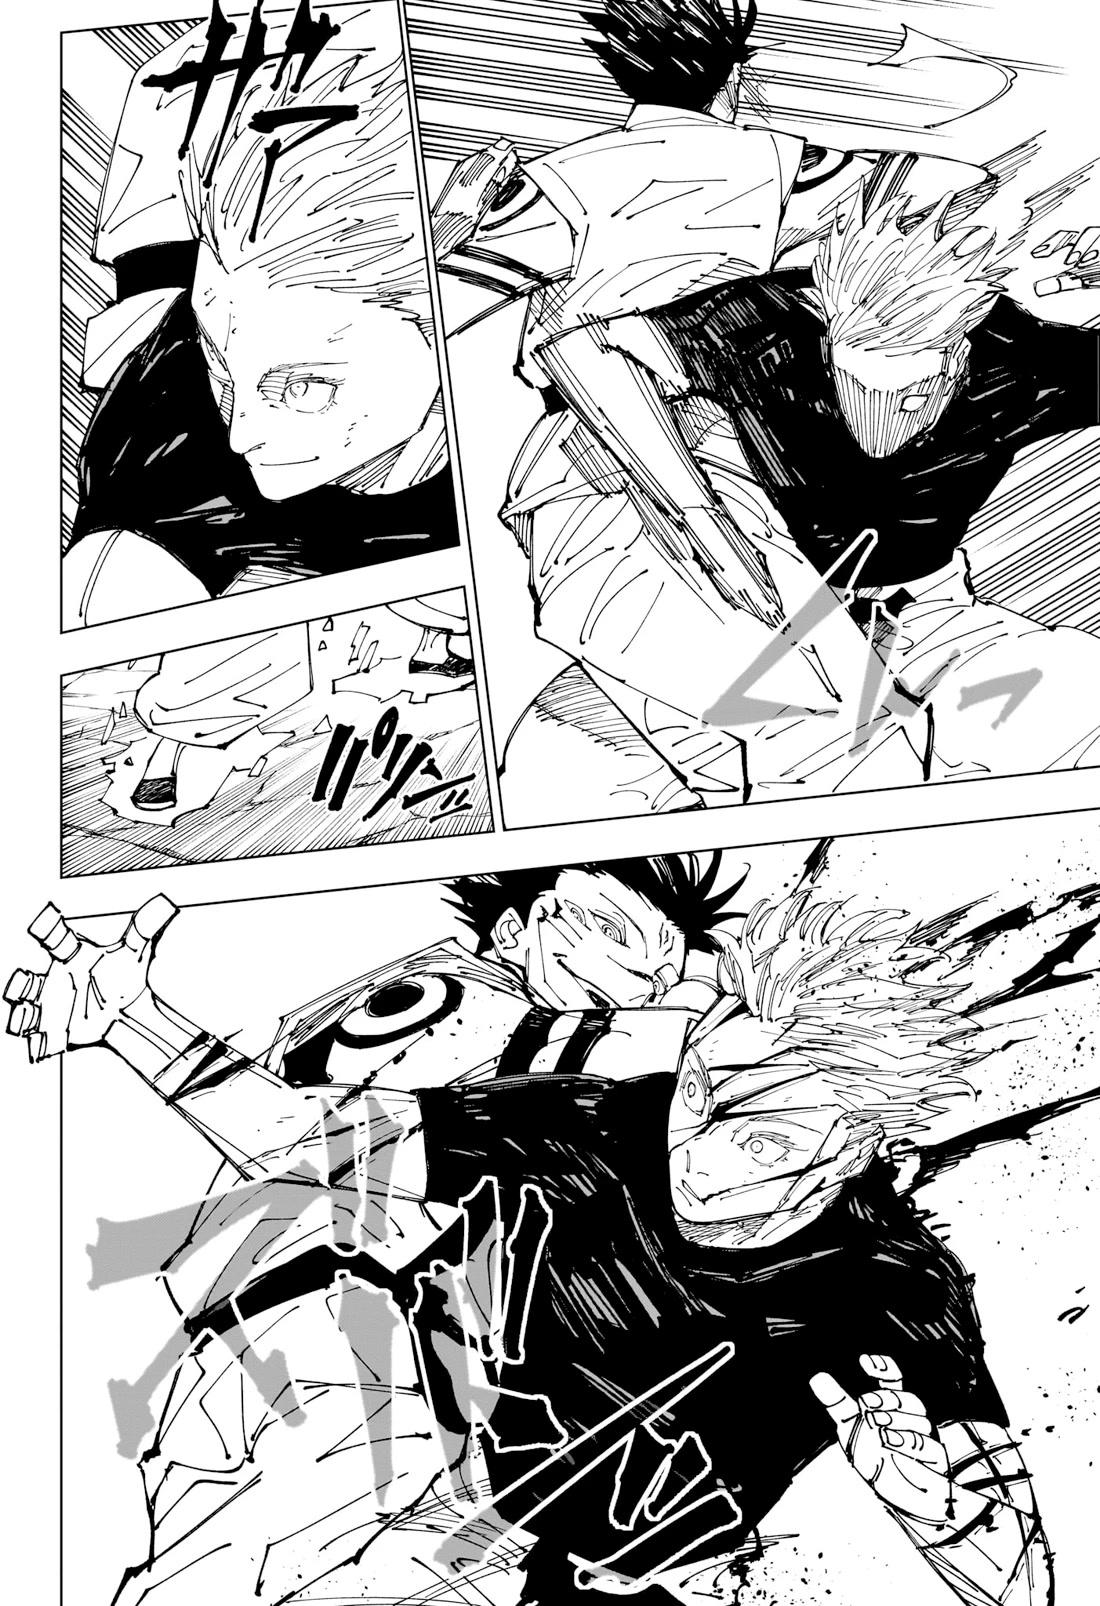 Jujutsu Kaisen Chapter 226: The Decisive Battle In The Uninhabited, Demon-Infested Shinjuku ④ page 12 - Mangakakalot